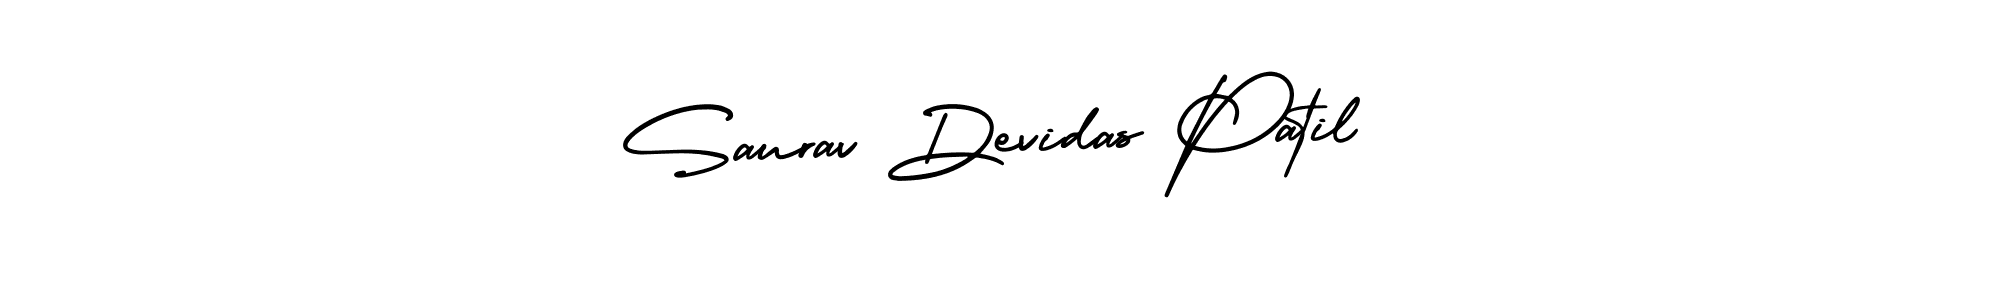 Best and Professional Signature Style for Saurav Devidas Patil. AmerikaSignatureDemo-Regular Best Signature Style Collection. Saurav Devidas Patil signature style 3 images and pictures png